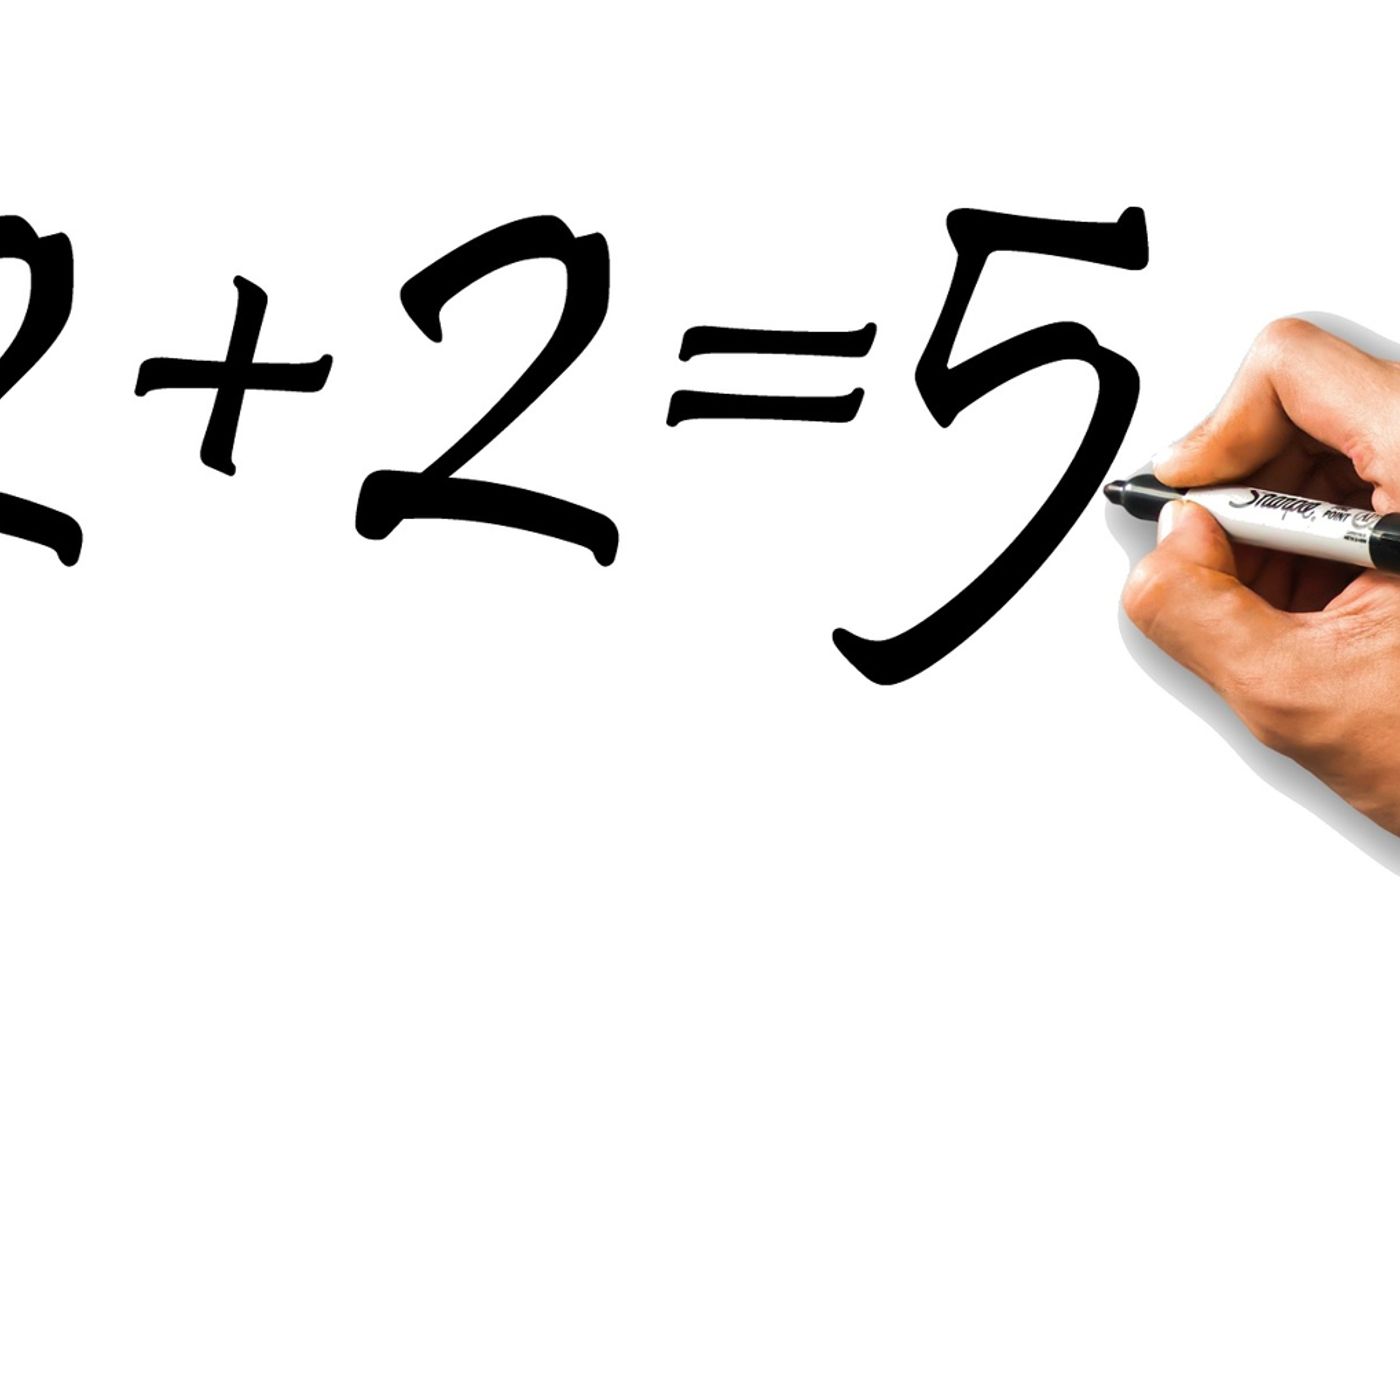 Episode 2: Funny math